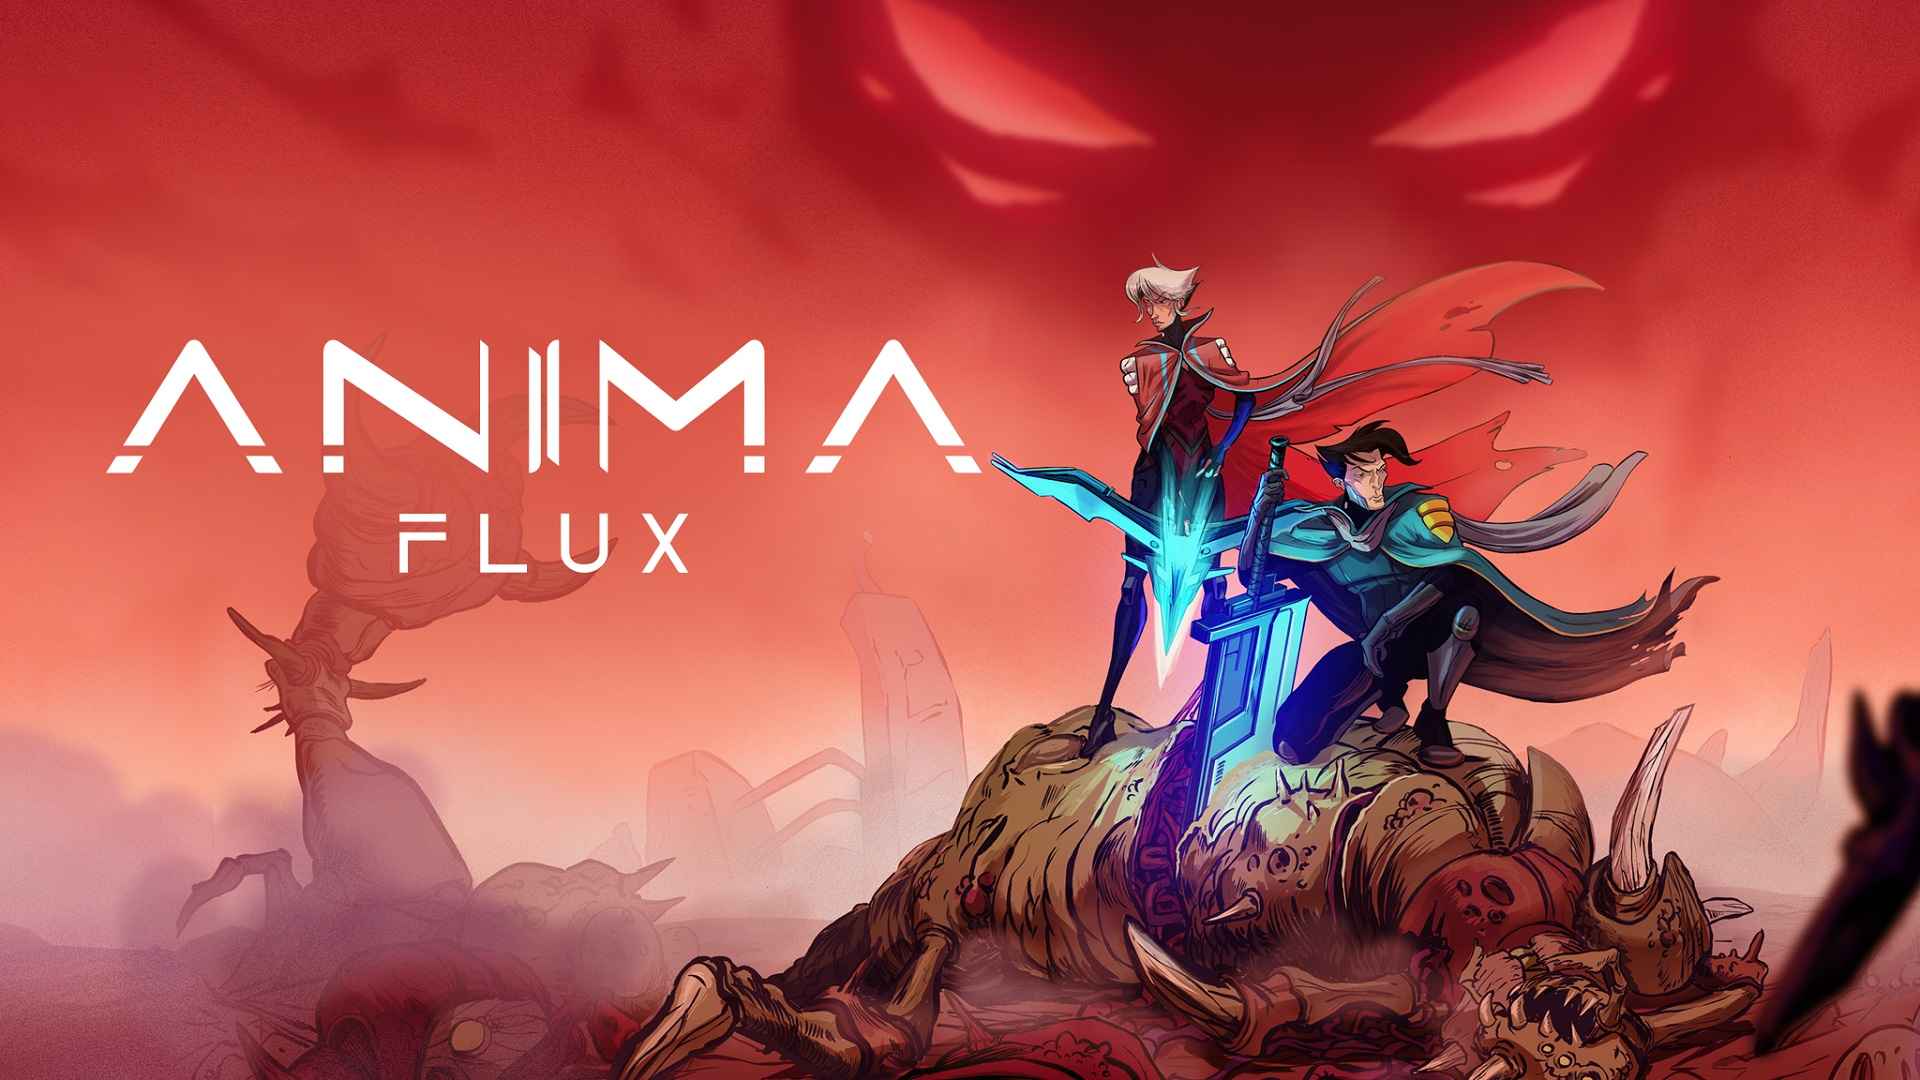 Anima Flux 2023 کی عکاسی کرتا ہے، مئی کمیونٹی ڈیمو کا اعلان کرتا ہے۔